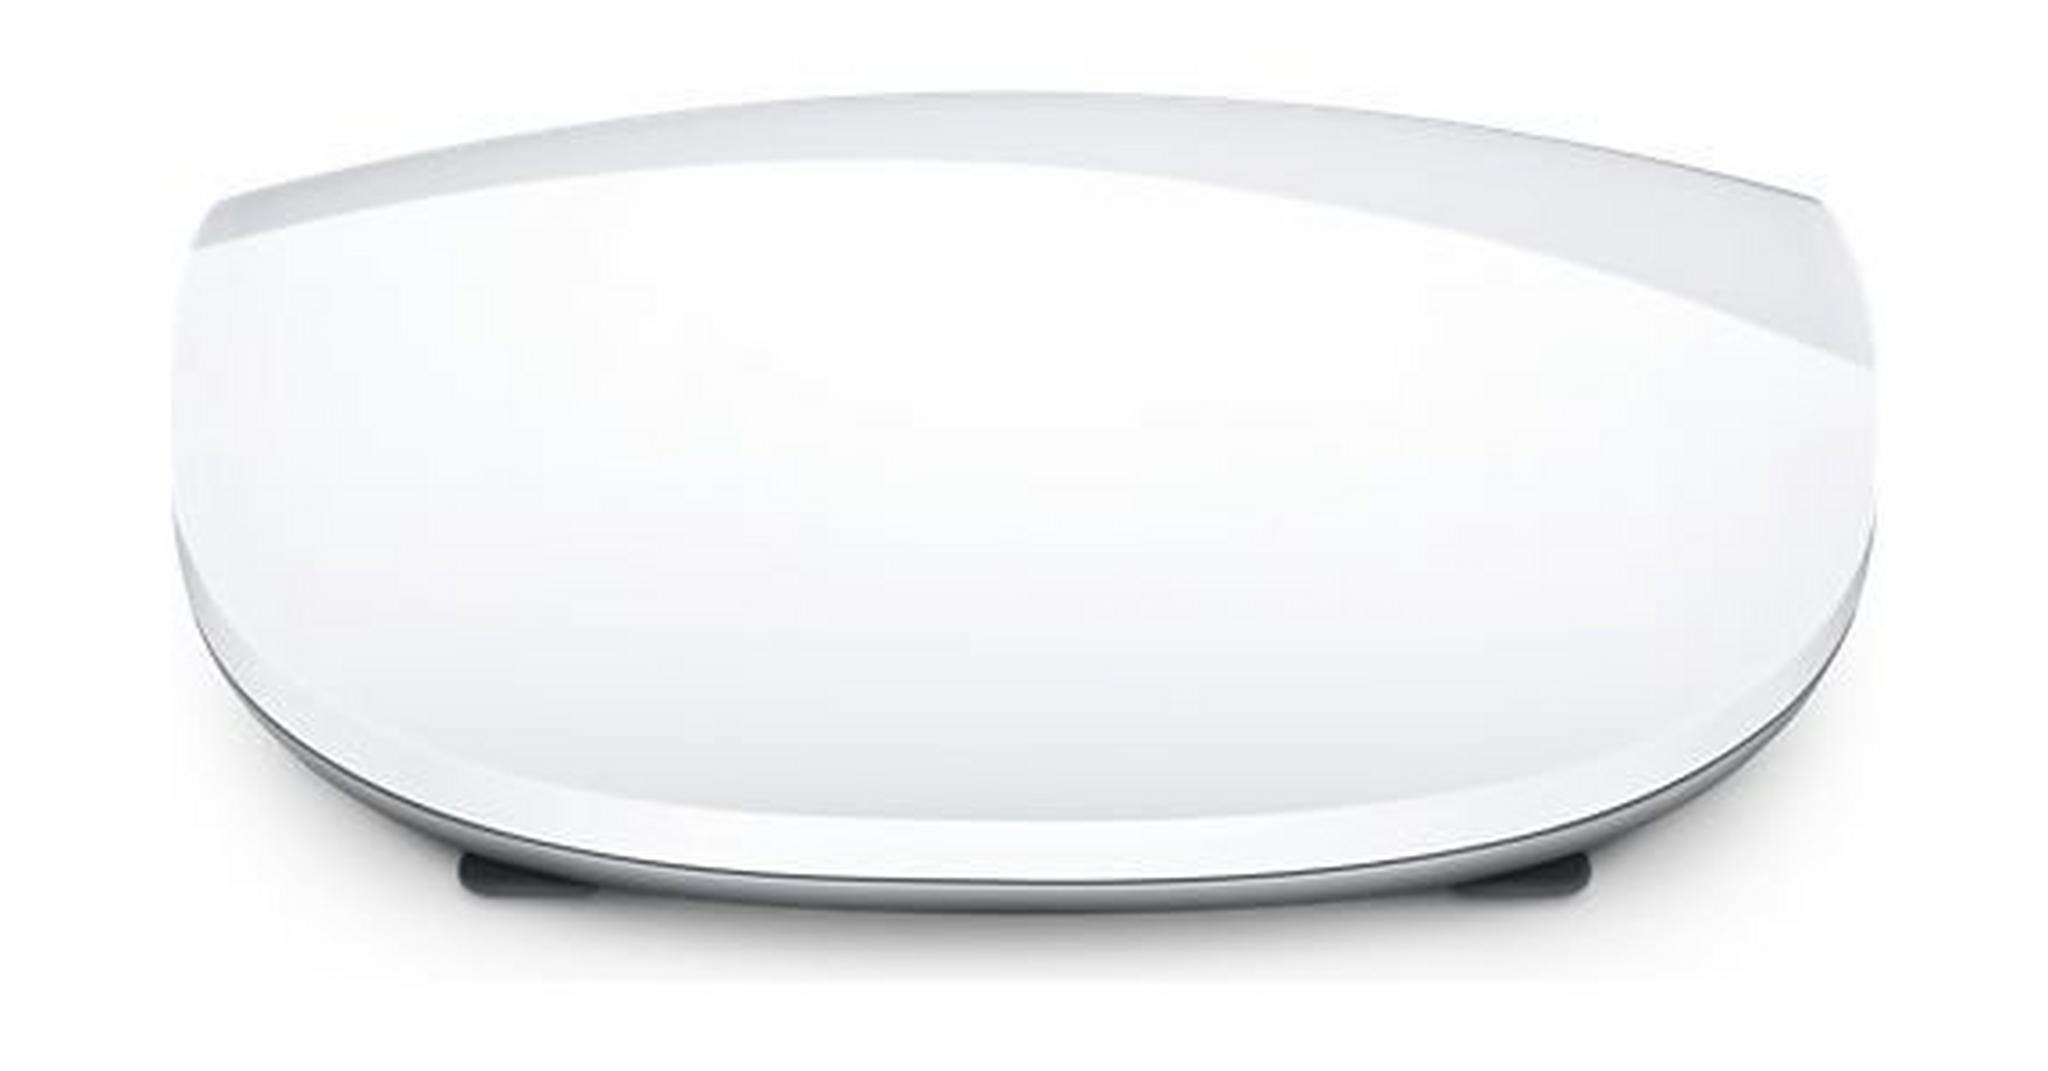 Apple Magic Mouse 2 – Silver